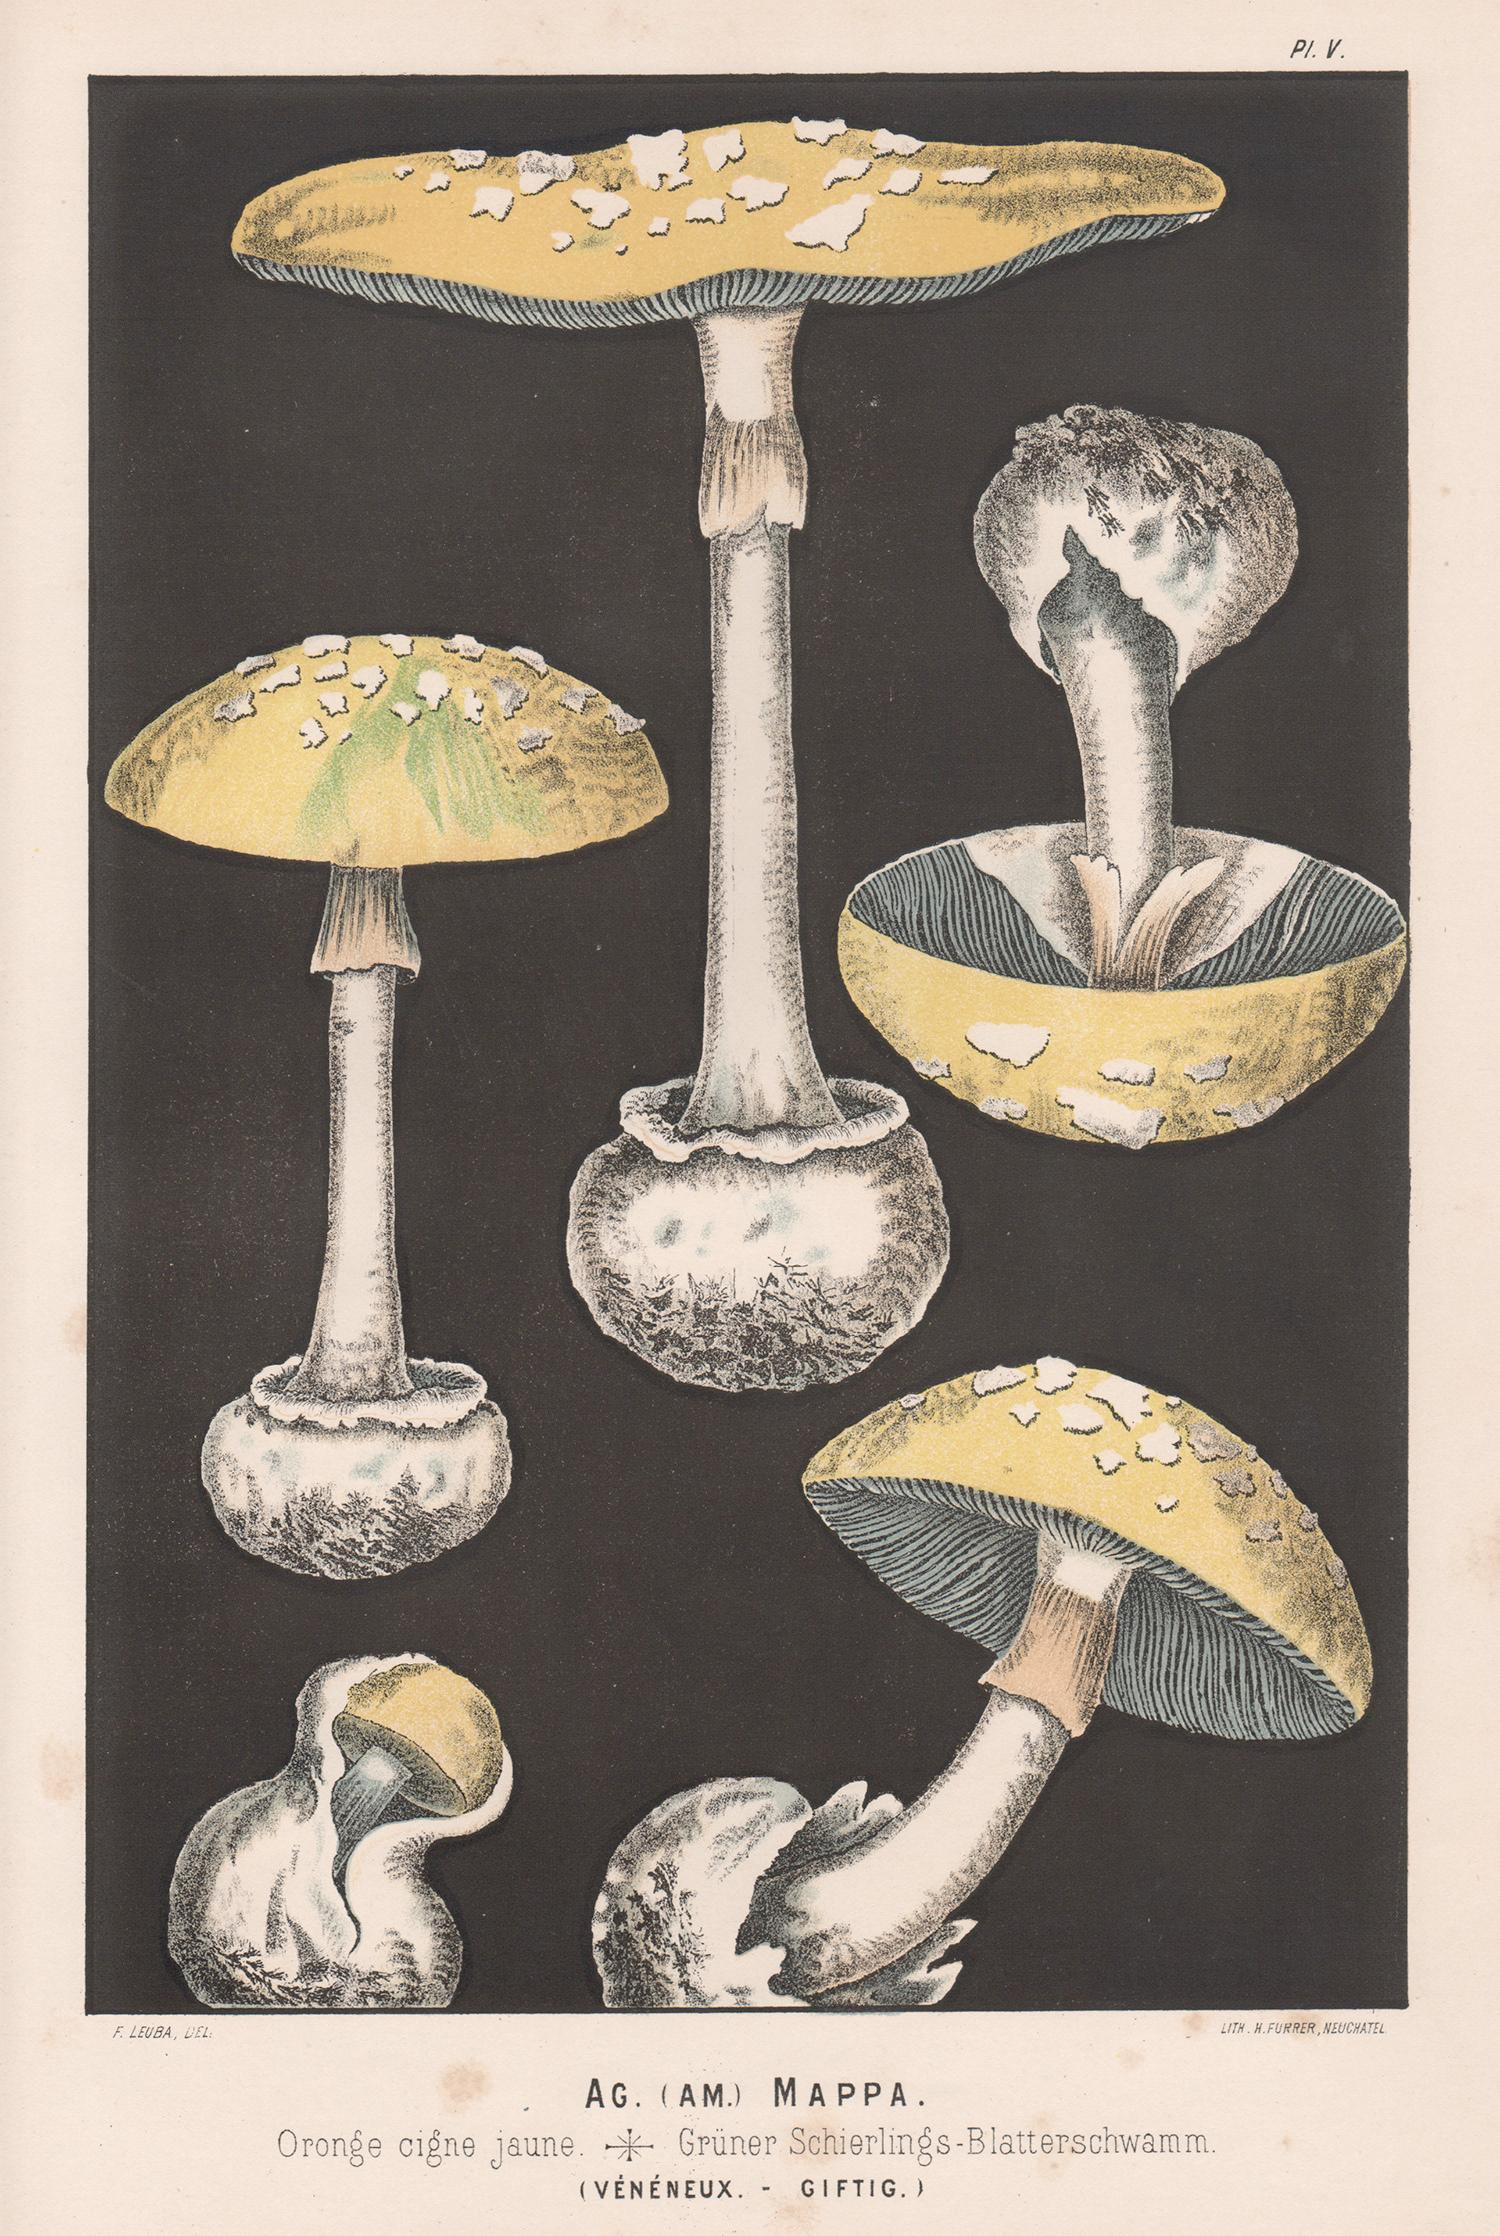 H Furrer after Fritz Leuba Still-Life Print – Agaricus Mappa, Leuba Antiker chromolithographier Druck aus Pilz fungi